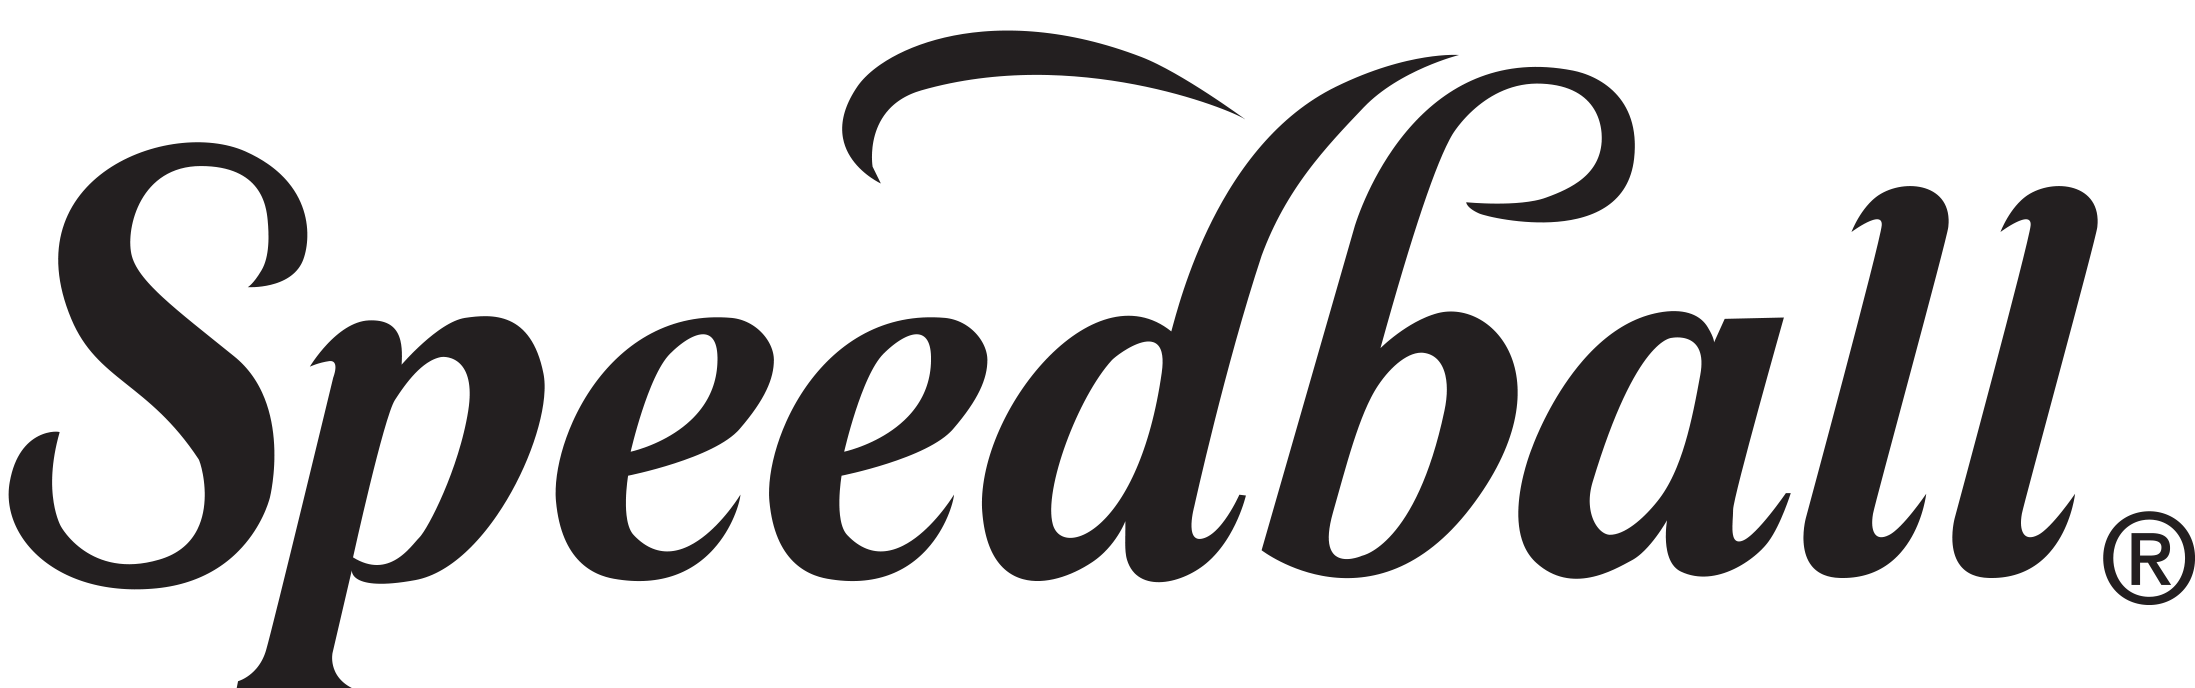 Speedball_logo